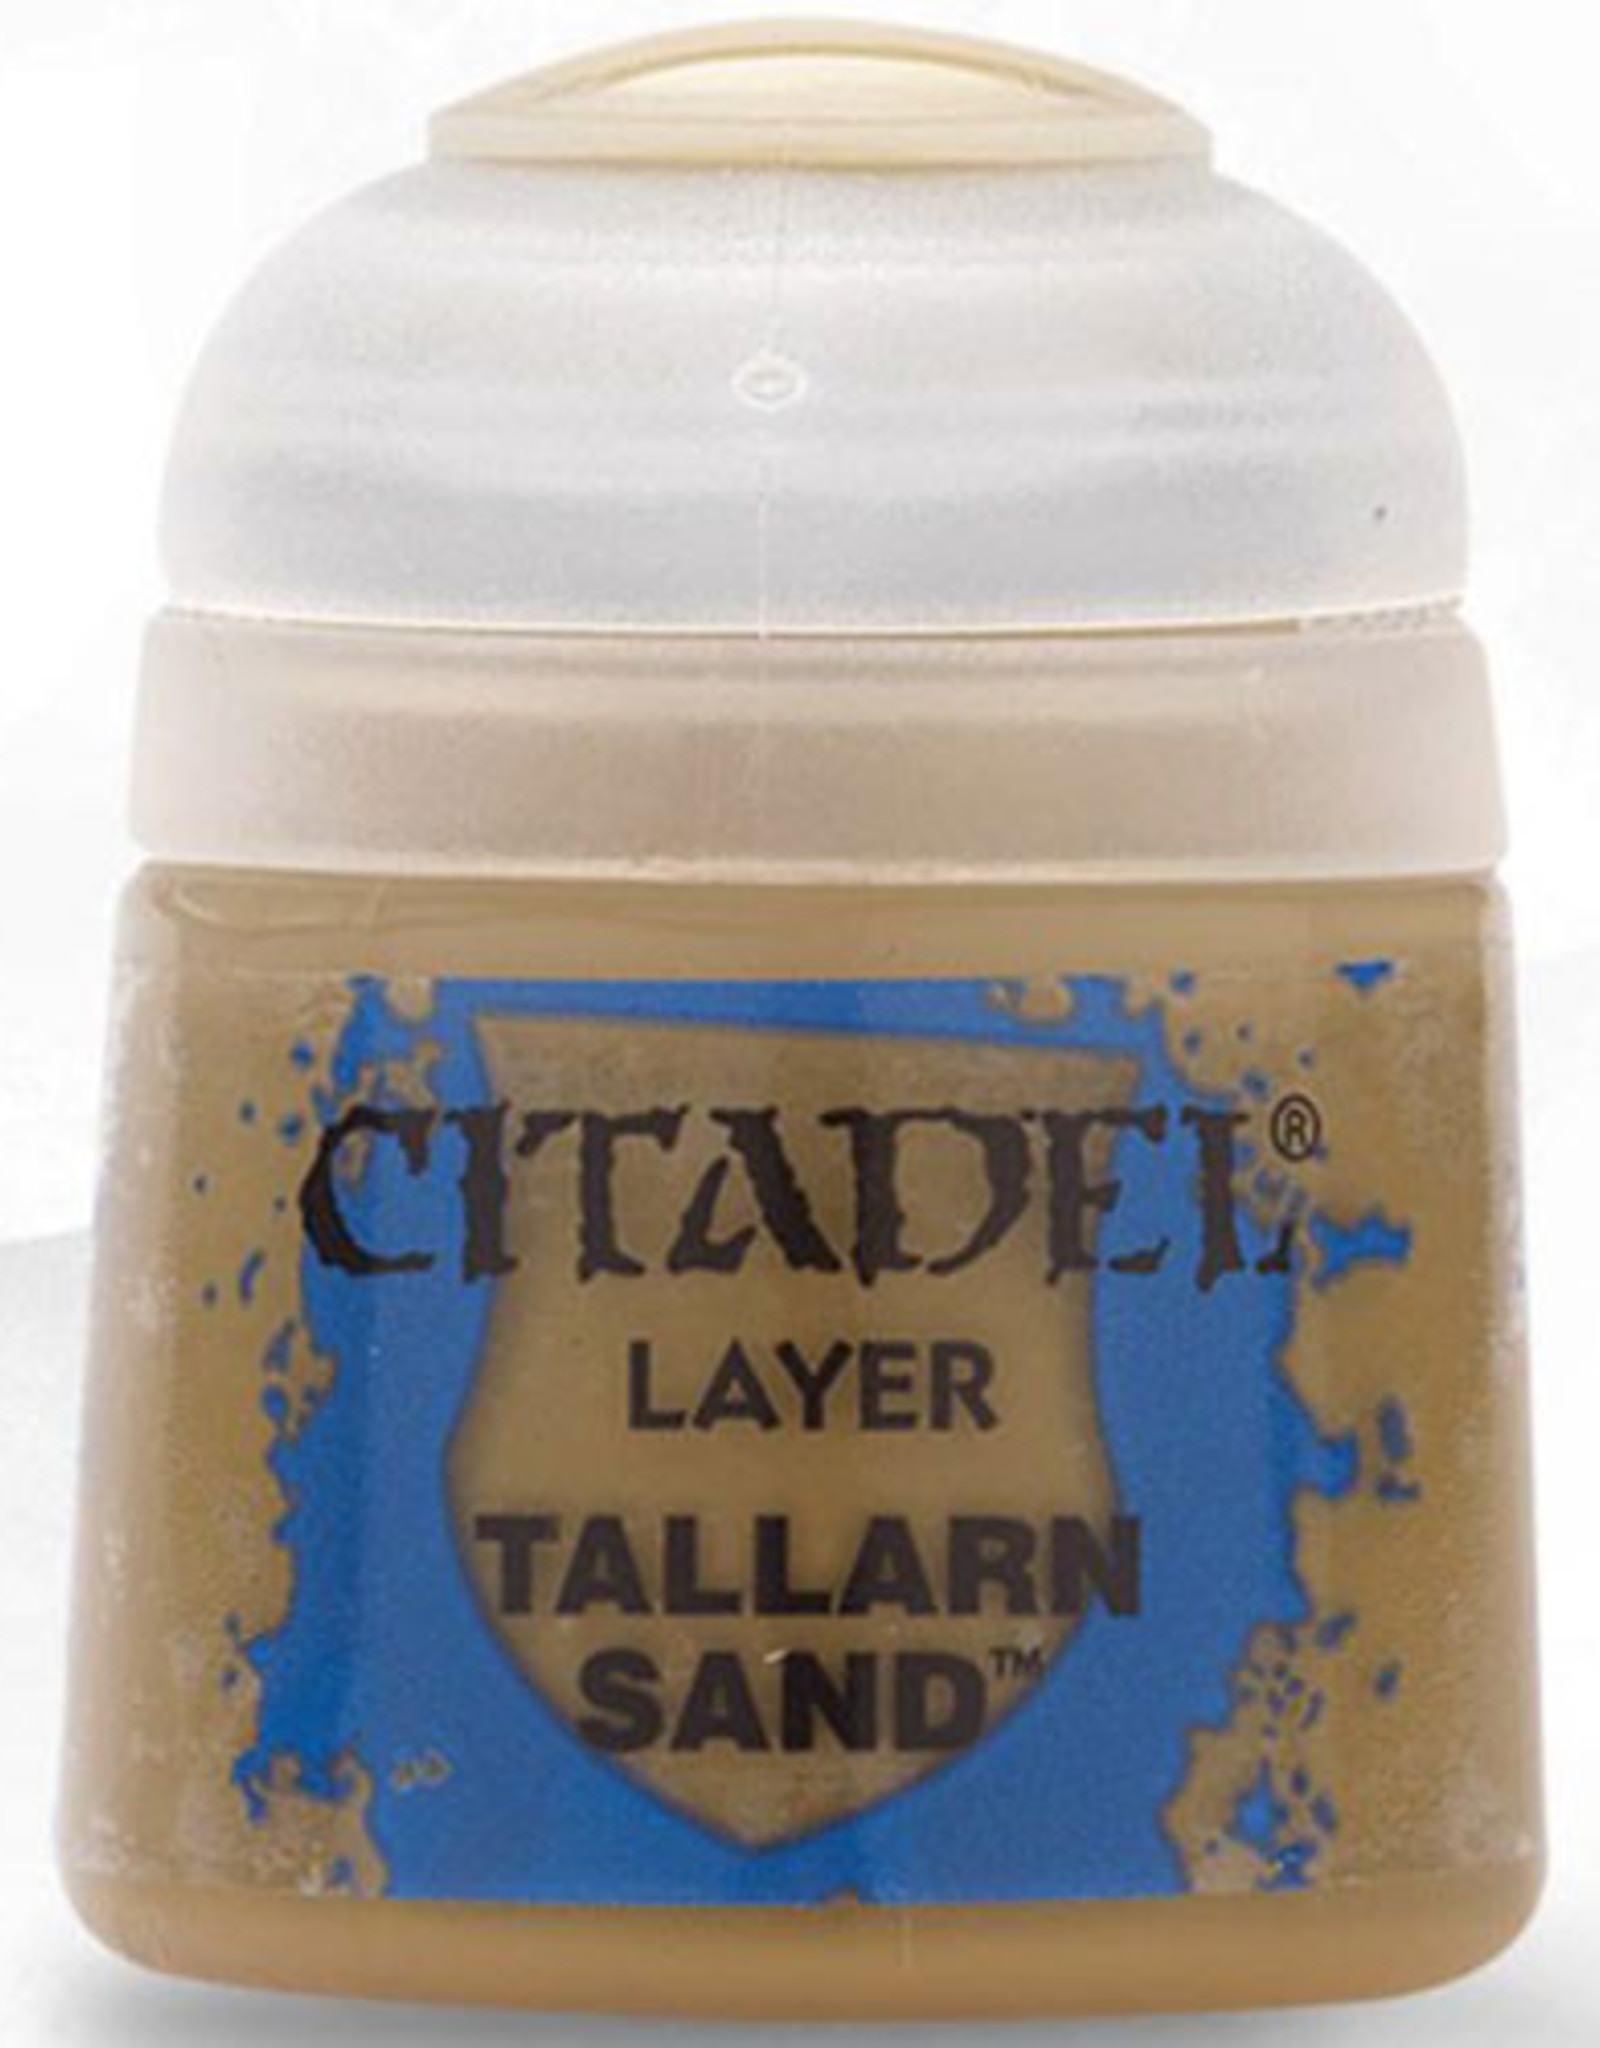 Games Workshop Citadel Layer: Tallarn Sand